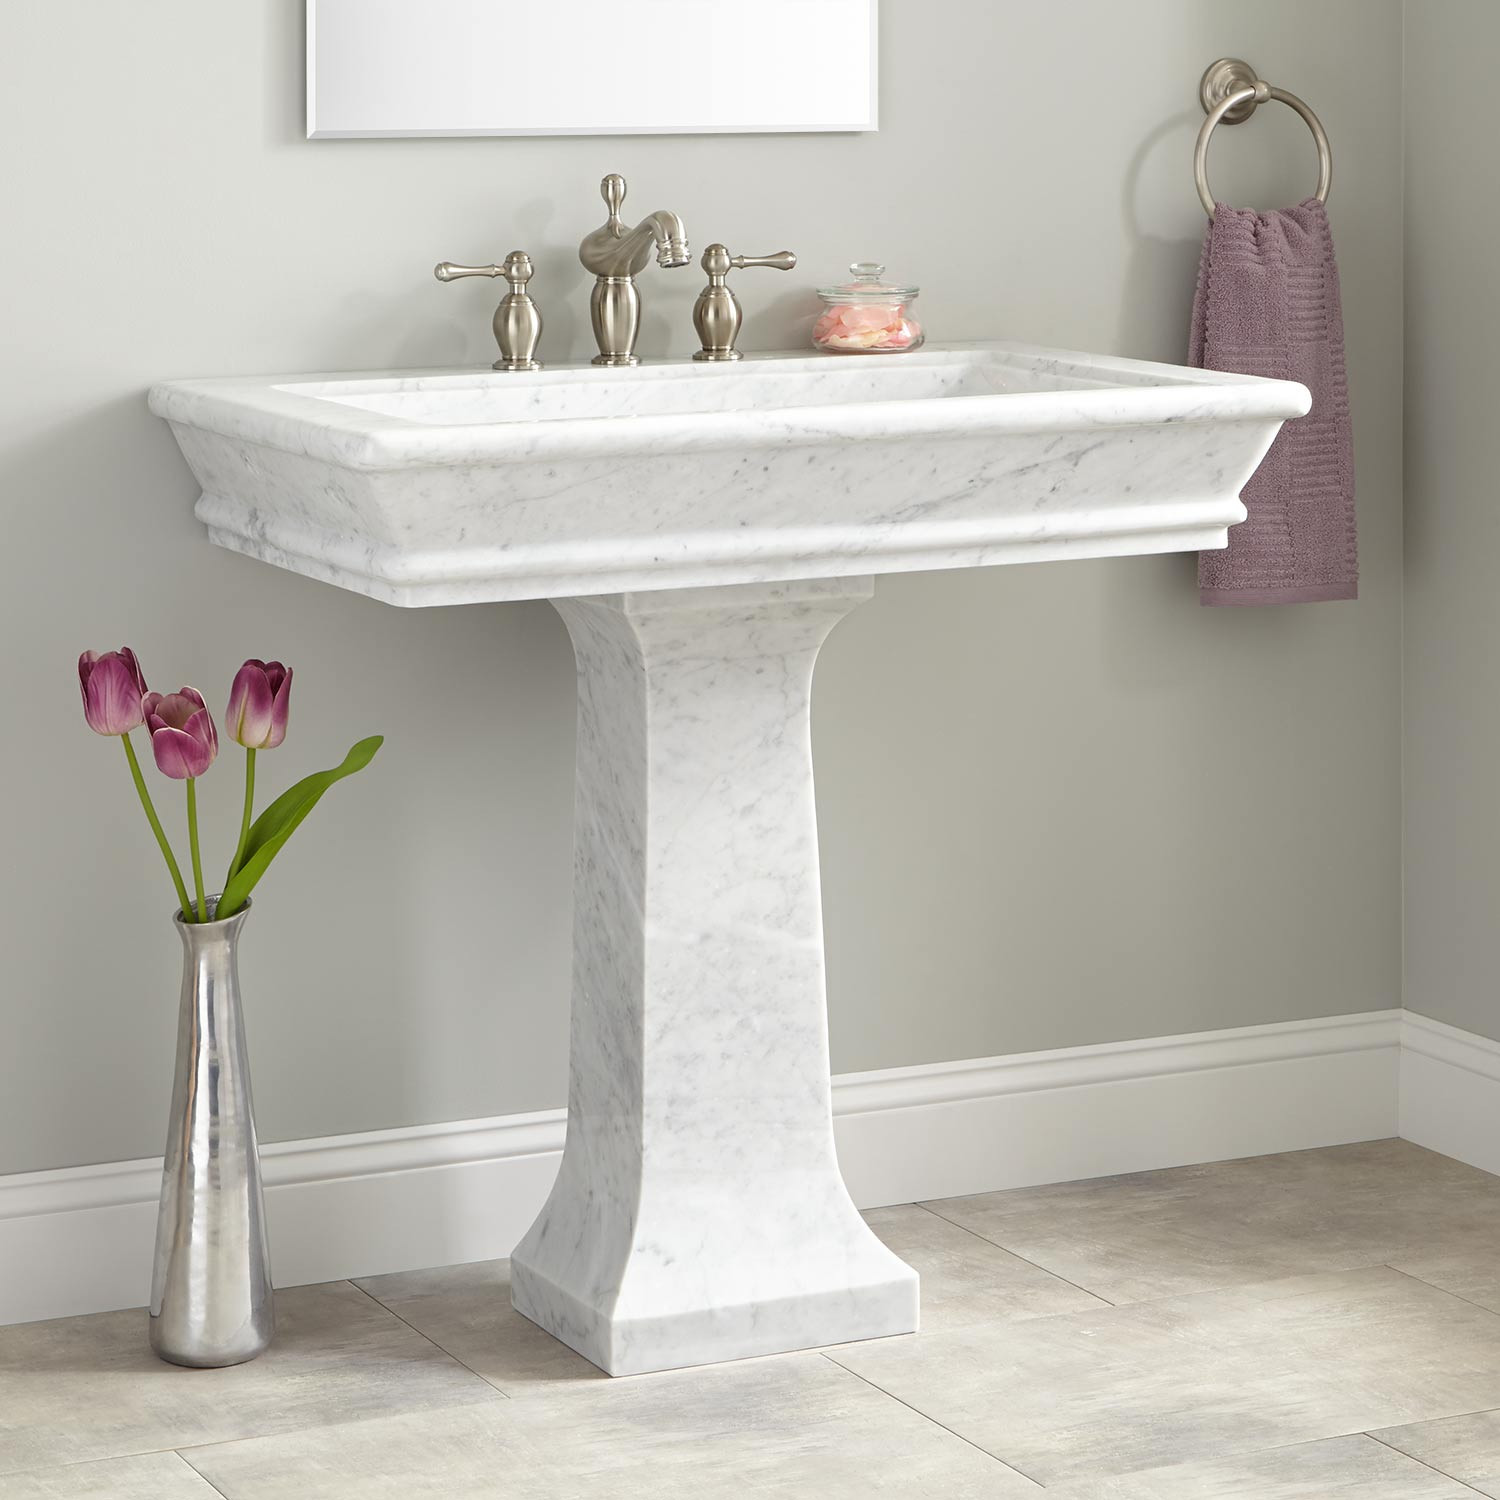 Best ideas about Pedestal Bathroom Sinks
. Save or Pin 36" Polished Carrara Marble Pedestal Sink Bathroom Sinks Now.